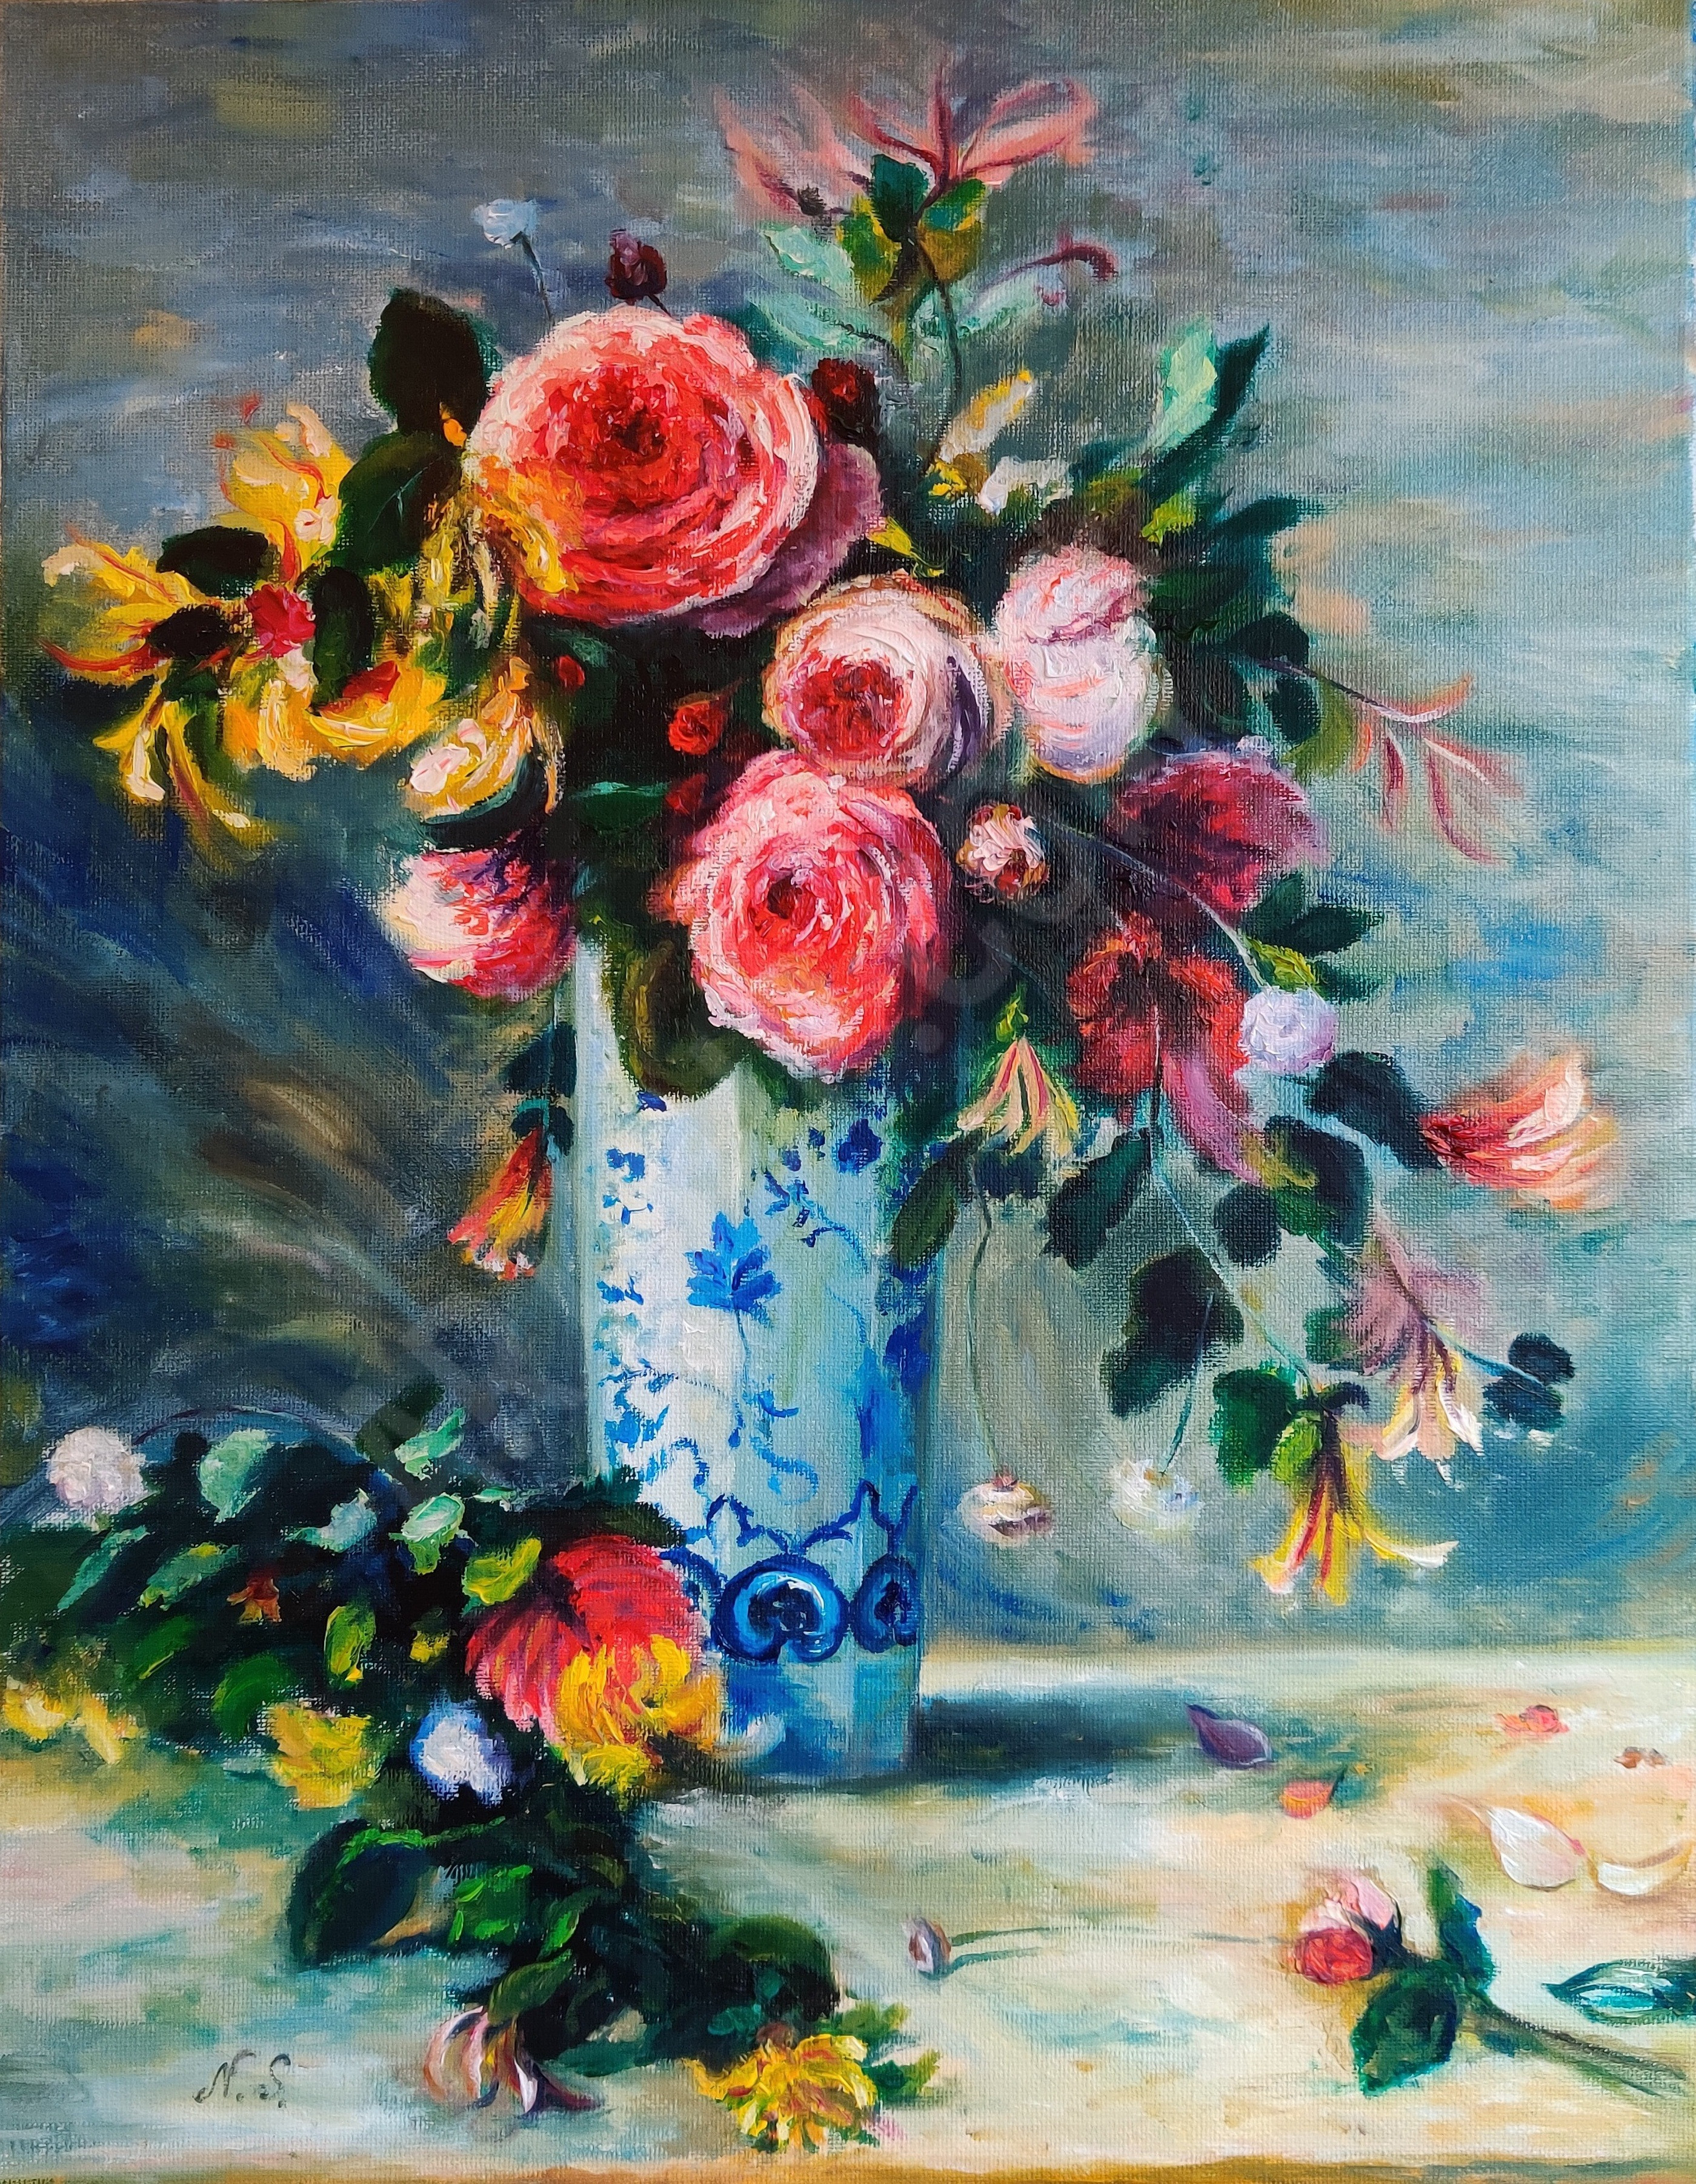 Oil painting flowers | ArtBUP - an international platform for Fine Art Paintings